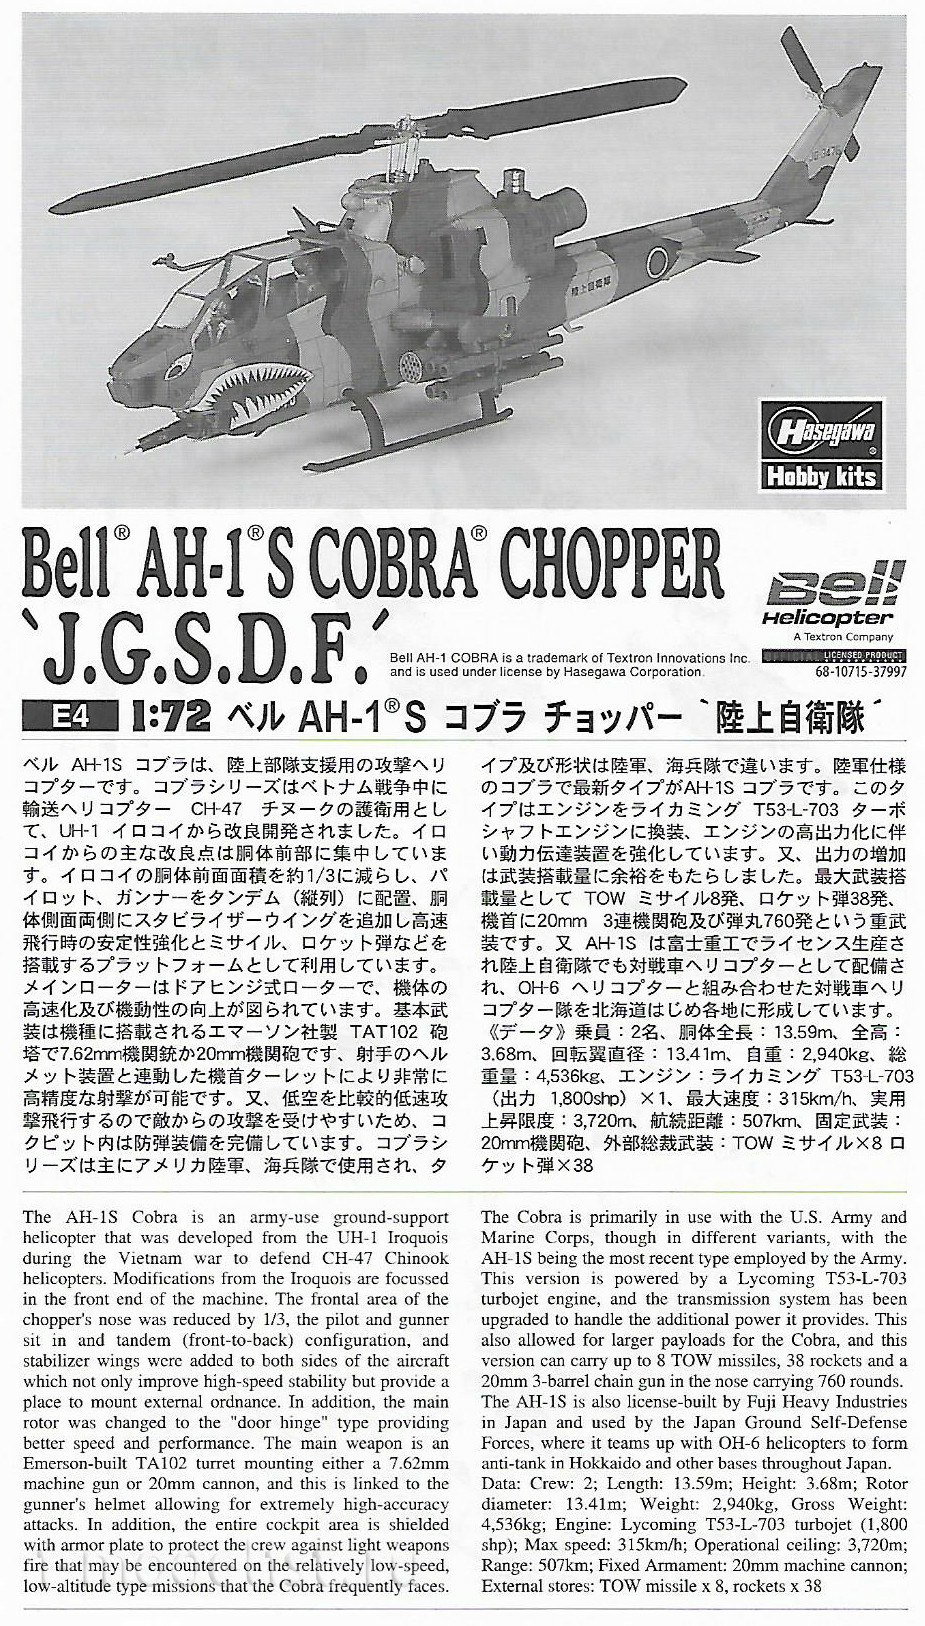 00534 Hasegawa 1/72 Вертолет Bell AH-1S Cobra